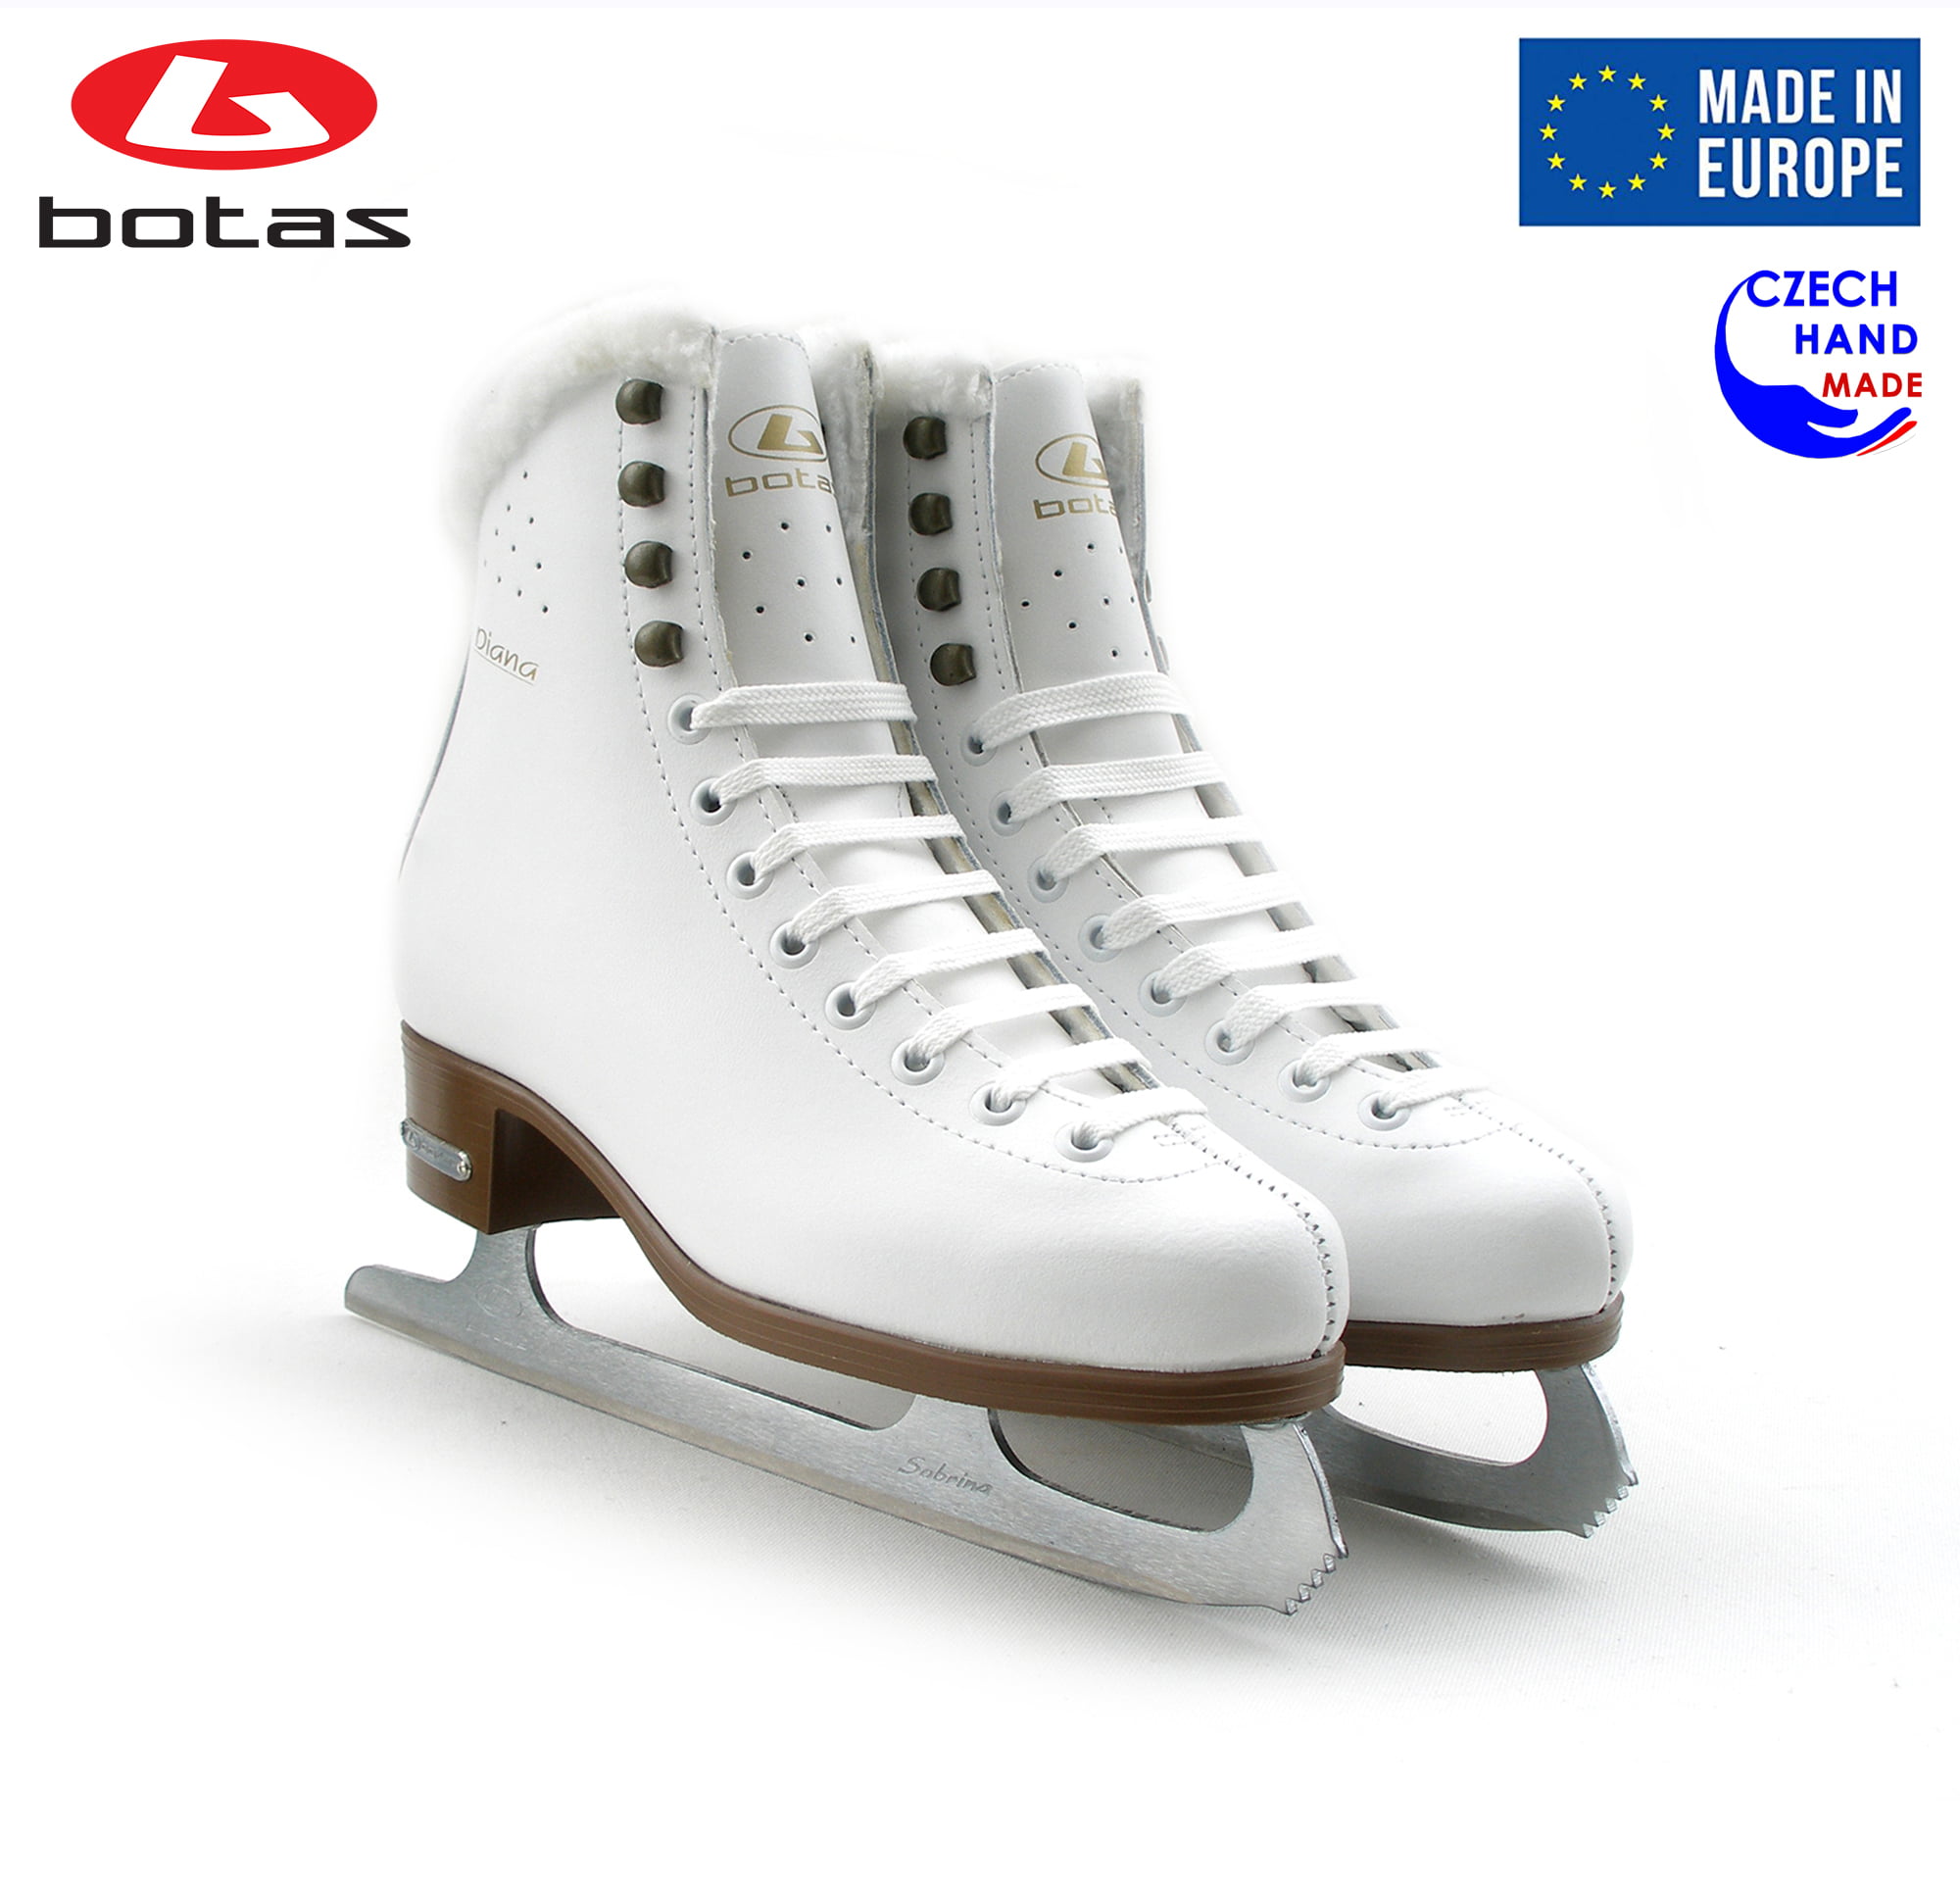 Botas Women Czech Republic / Figure Ice Skates for Men Boys Girls/Sabrina Blades Made in Europe 